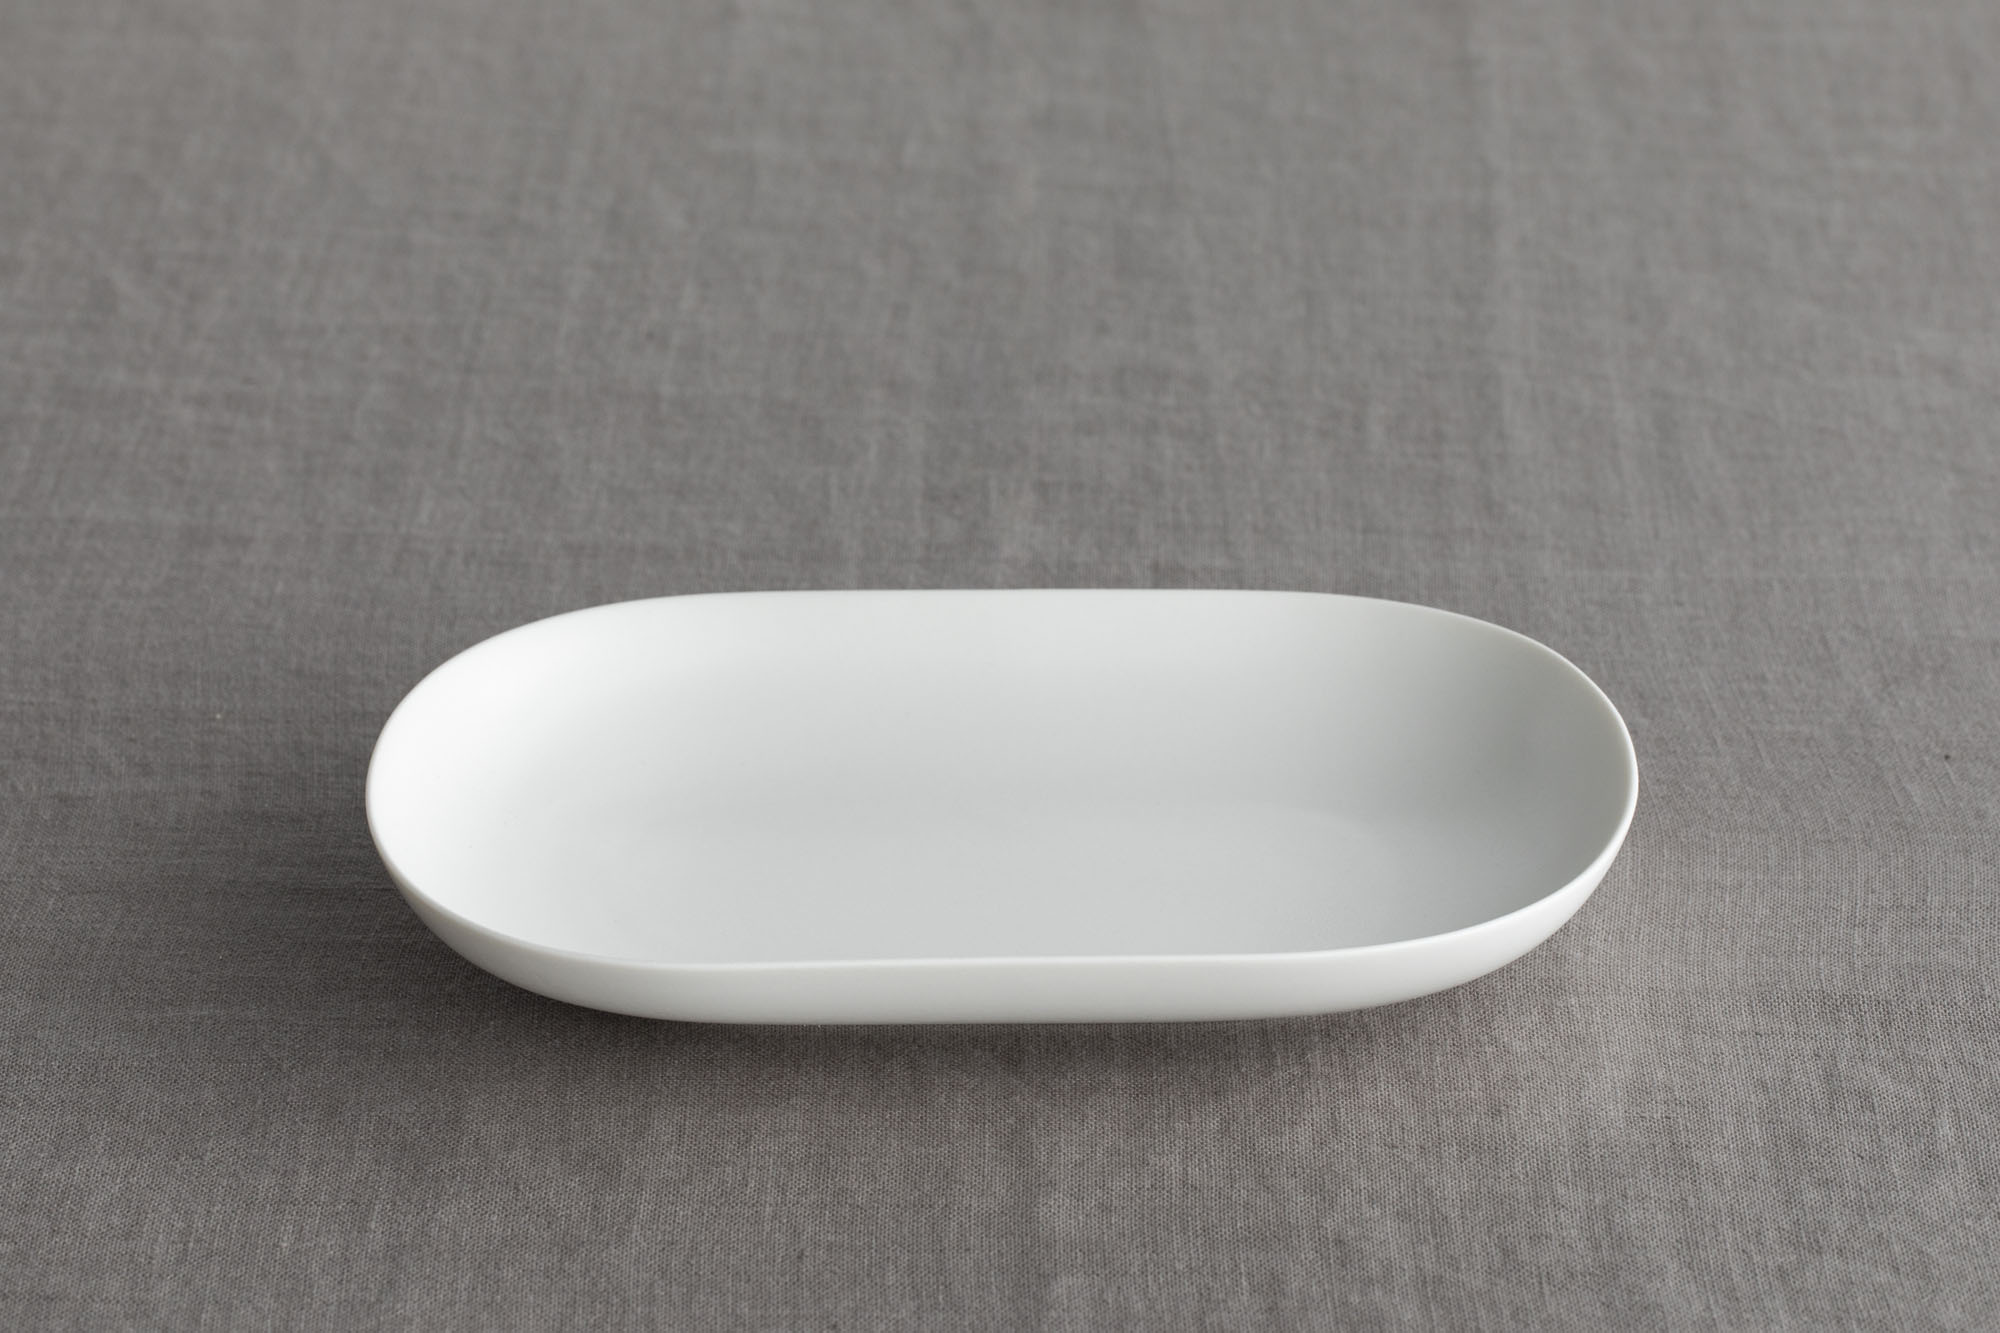 ReIRABO　oval plate M - yumiko iihoshi porcelain 公式オンラインショップ